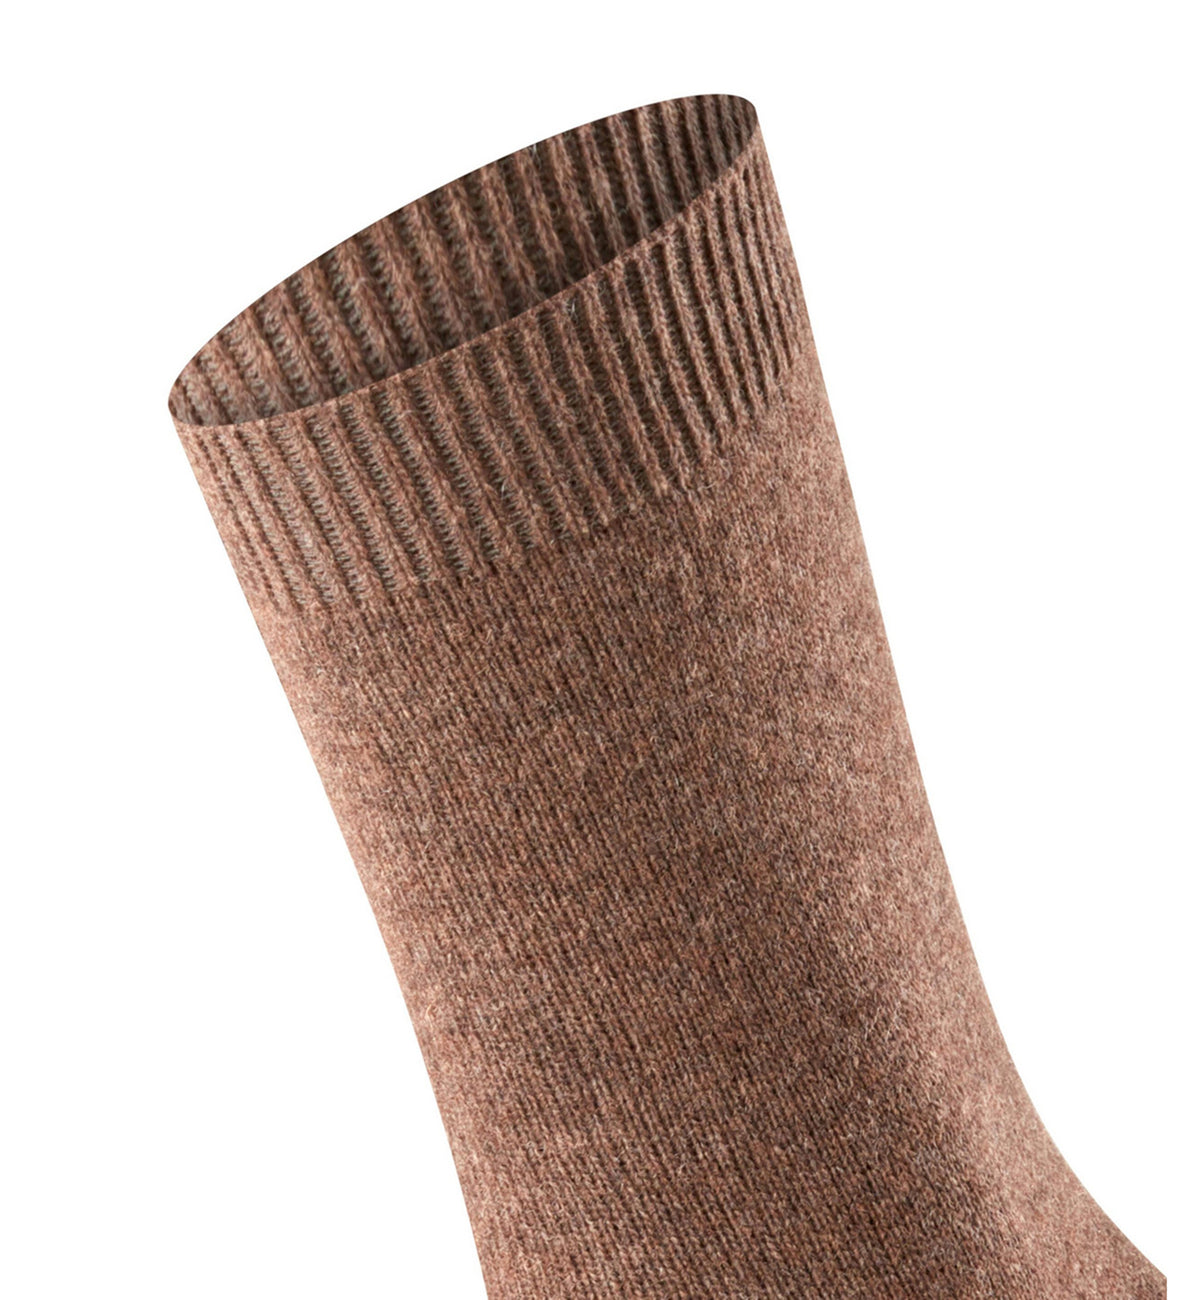 FALKE Cosy Wool Crew Socks (47548),5/7.5,Jasper - Jasper,5/7.5